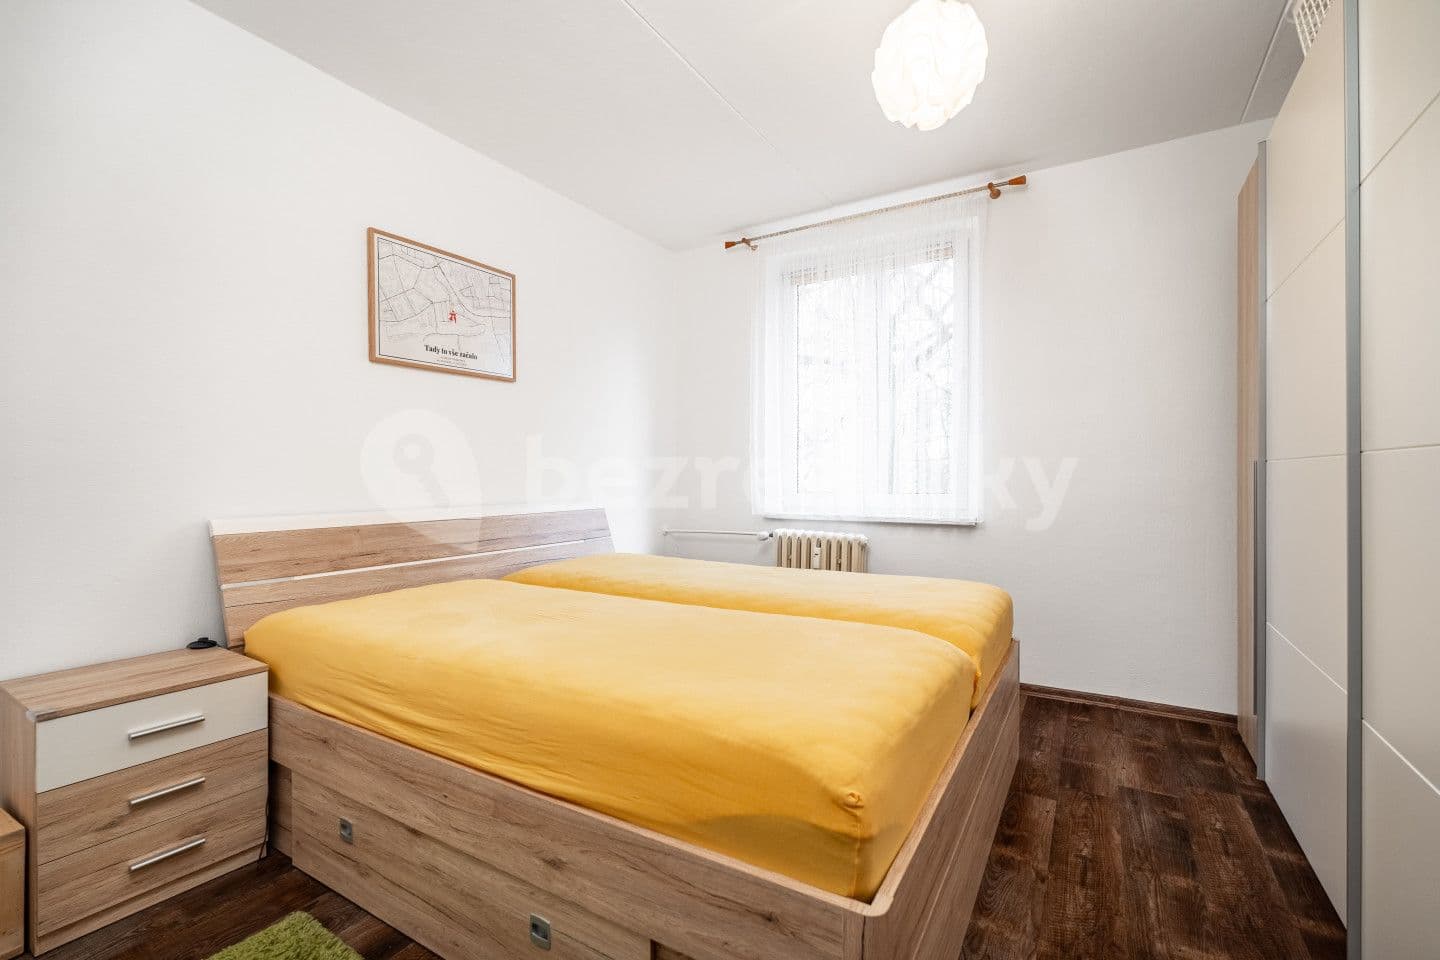 3 bedroom flat for sale, 75 m², Na Kopci, Jihlava, Vysočina Region